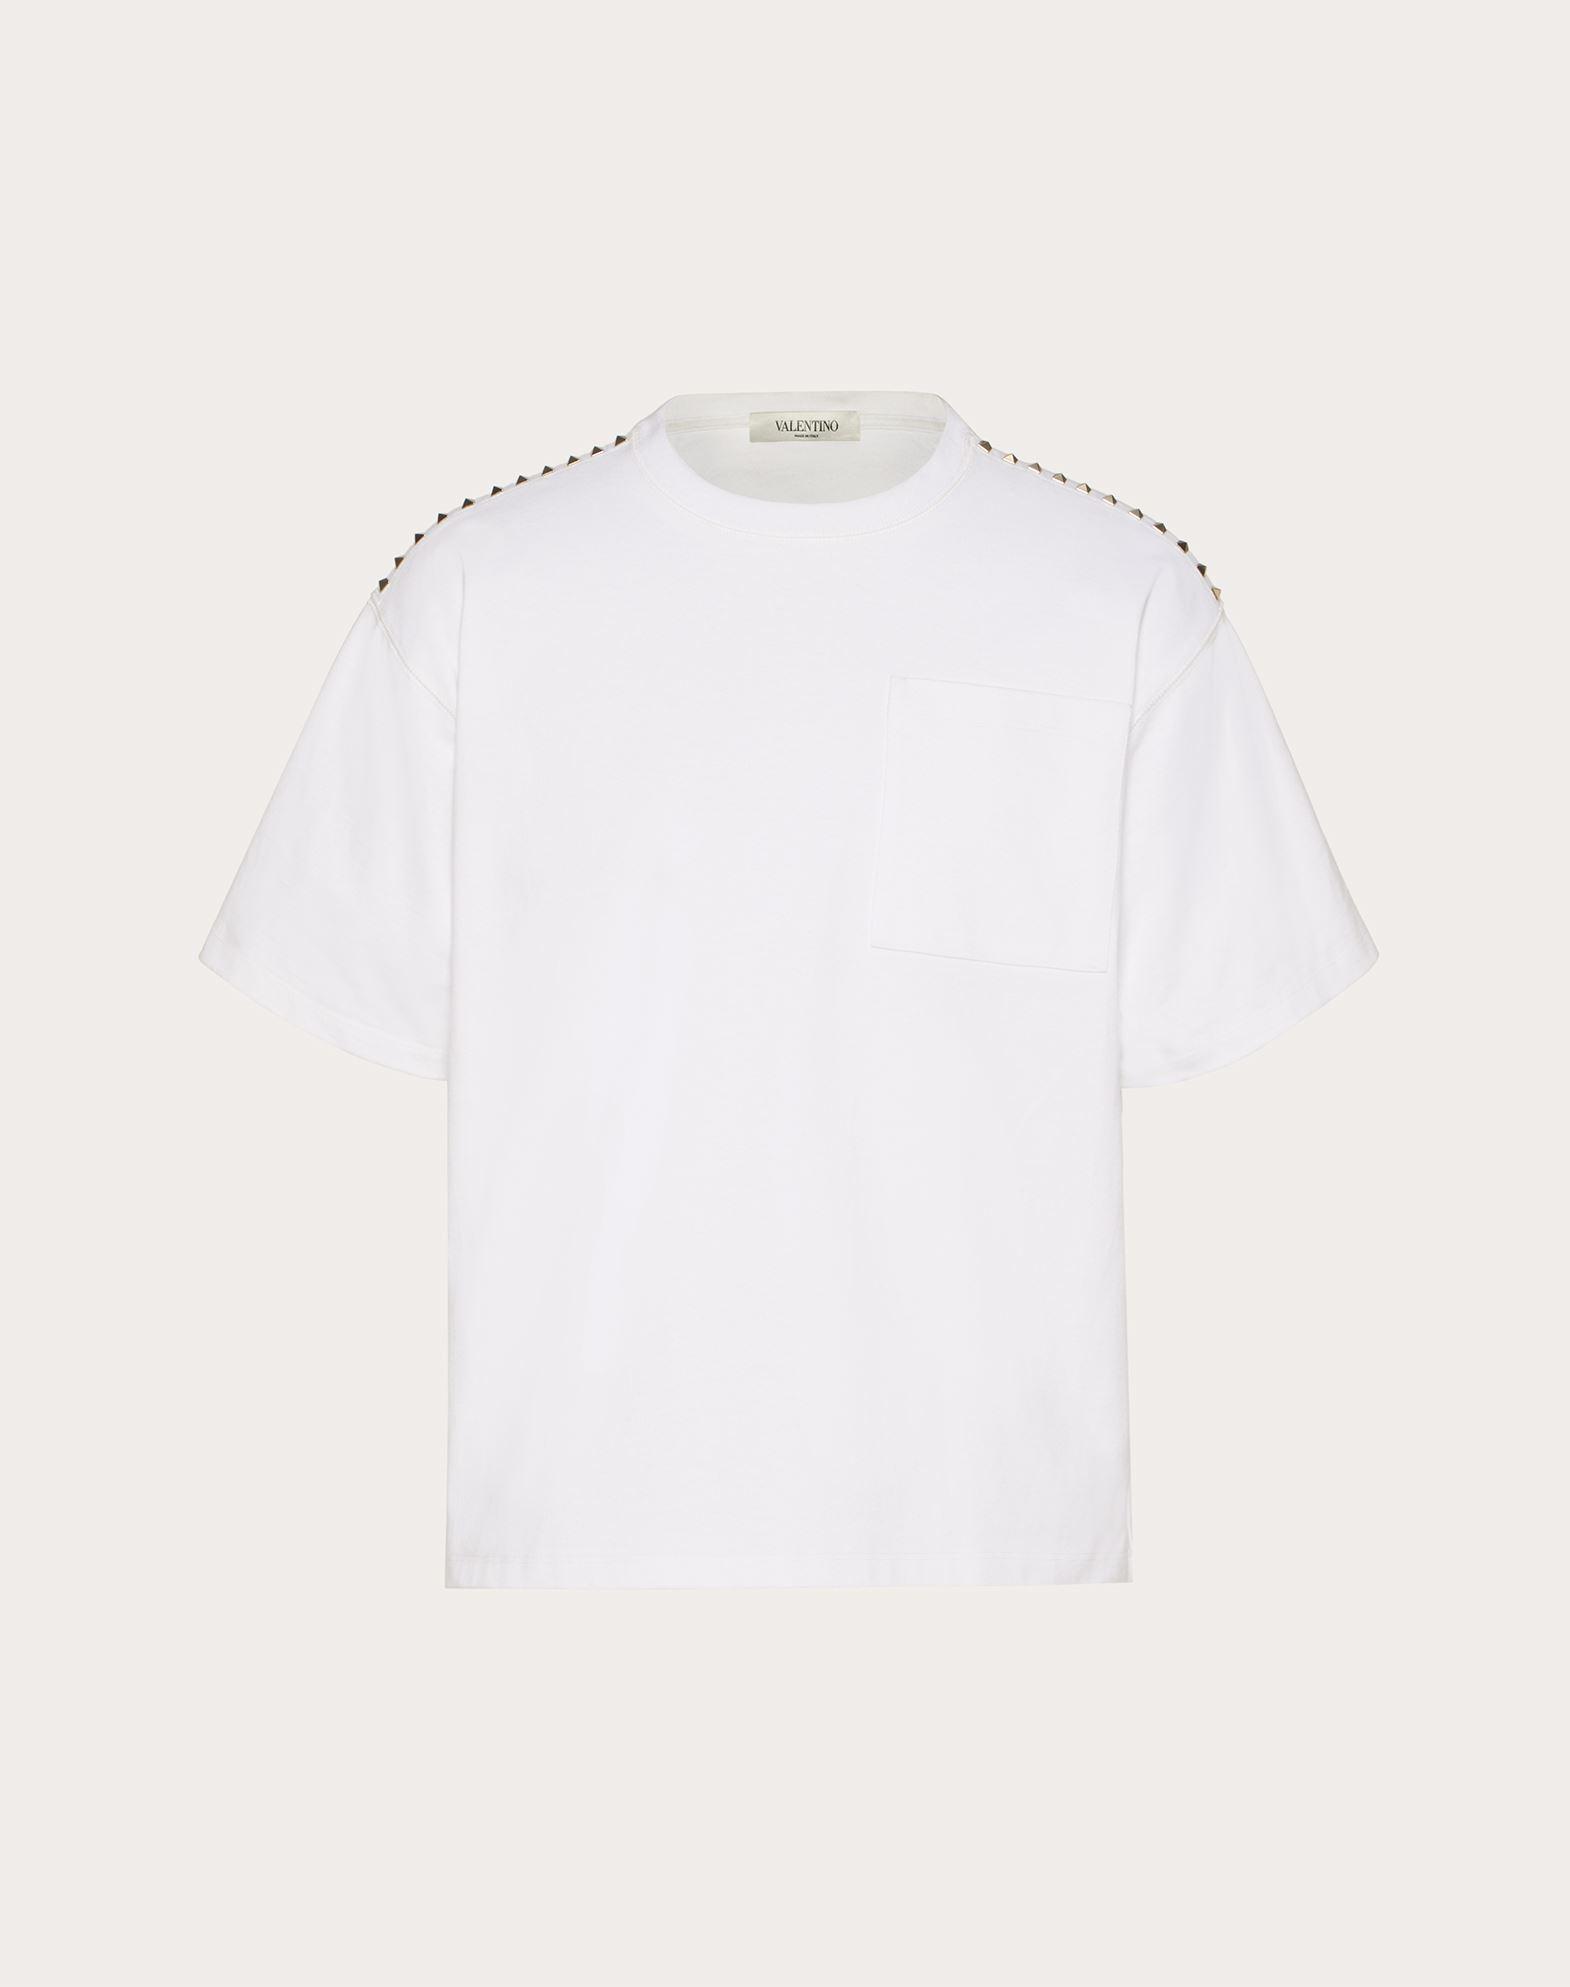 Valentino Cotton Valentino Rockstud Untitled T-shirt in White for Men - Lyst